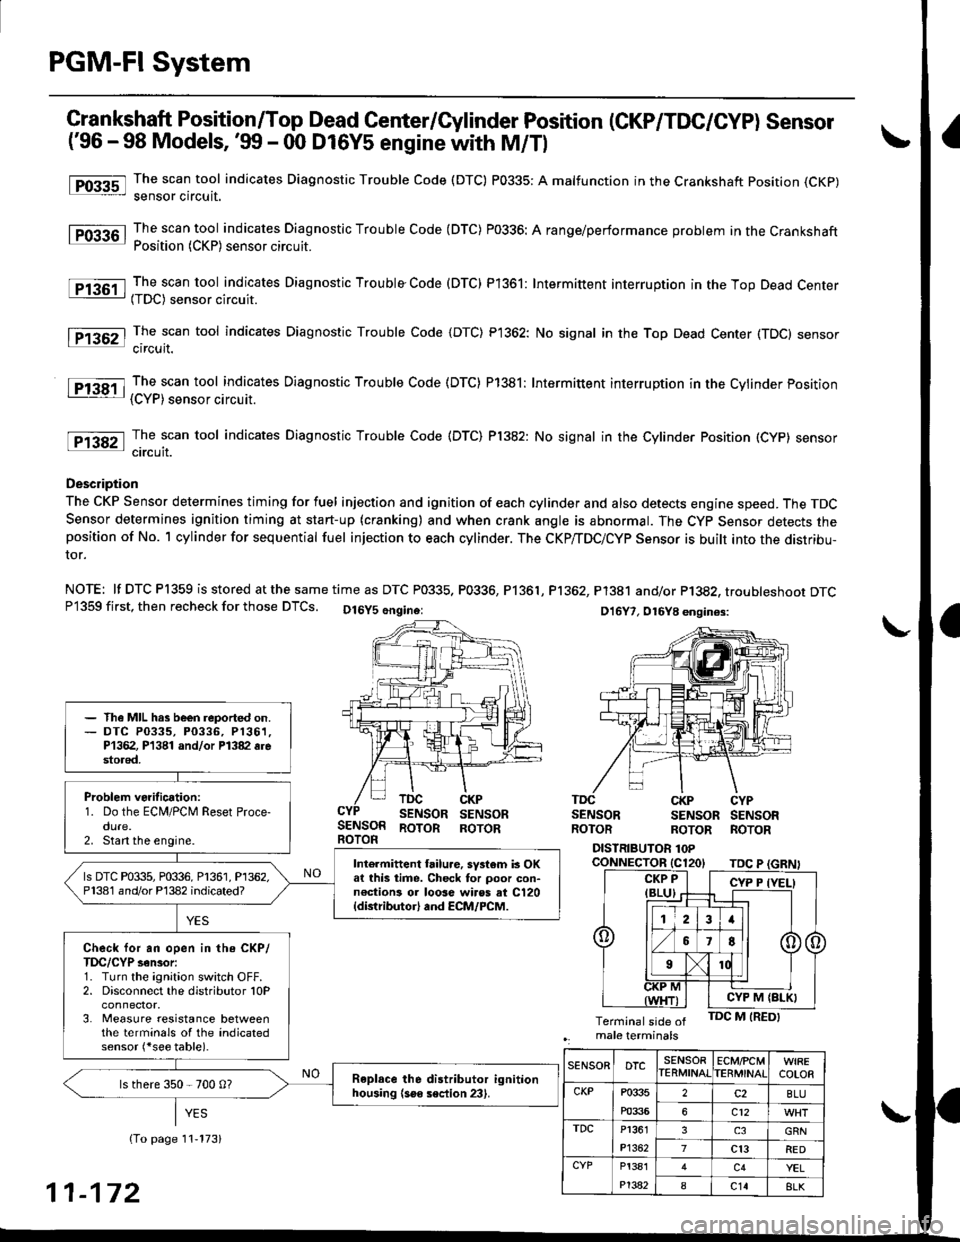 HONDA CIVIC 1998 6.G Service Manual PGM-FI System
tFos3sl
tFffi6l
tPr361 I
fPfi62l
fFr38il
tF13s2-l
Crankshaft Position/Top Dead Genter/Gylinder Position (CKP/TDC/CYP) Sensor
(96 - 98 Models, !n - 00 D16Y5 engine with M/Tl
The scan to